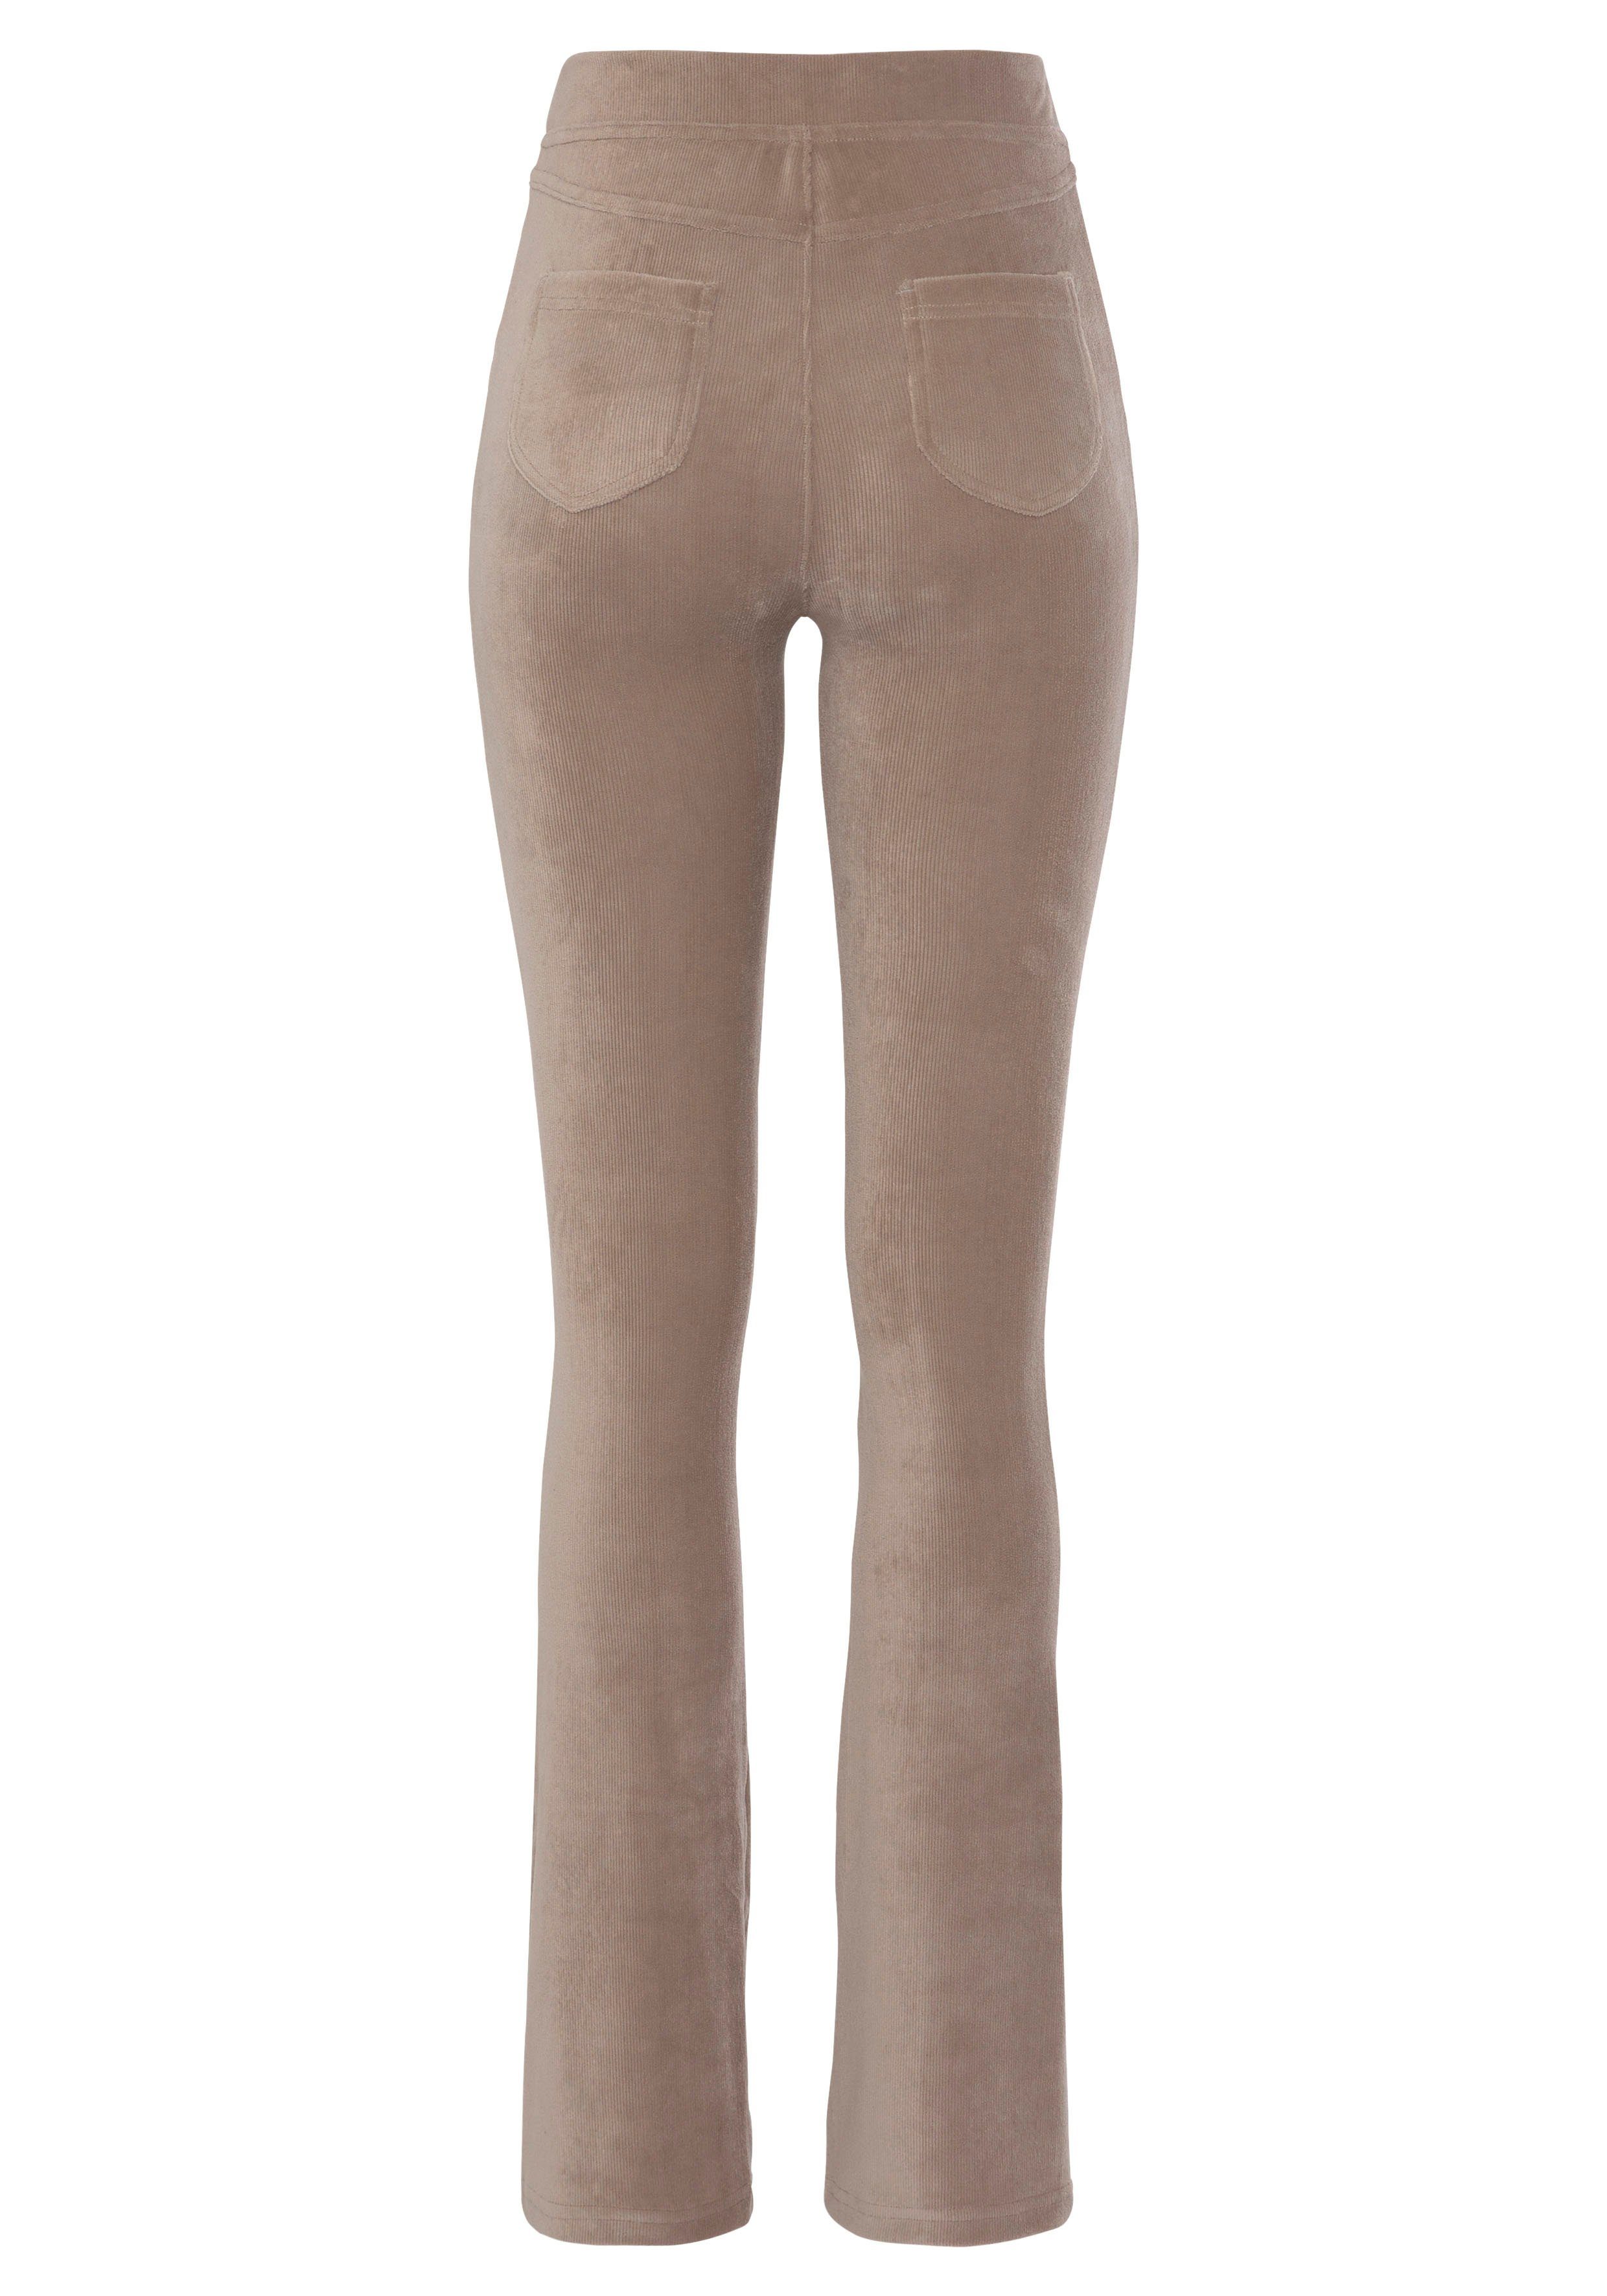 LASCANA Jazzpants in aus Material Loungewear Cord-Optik, taupe weichem